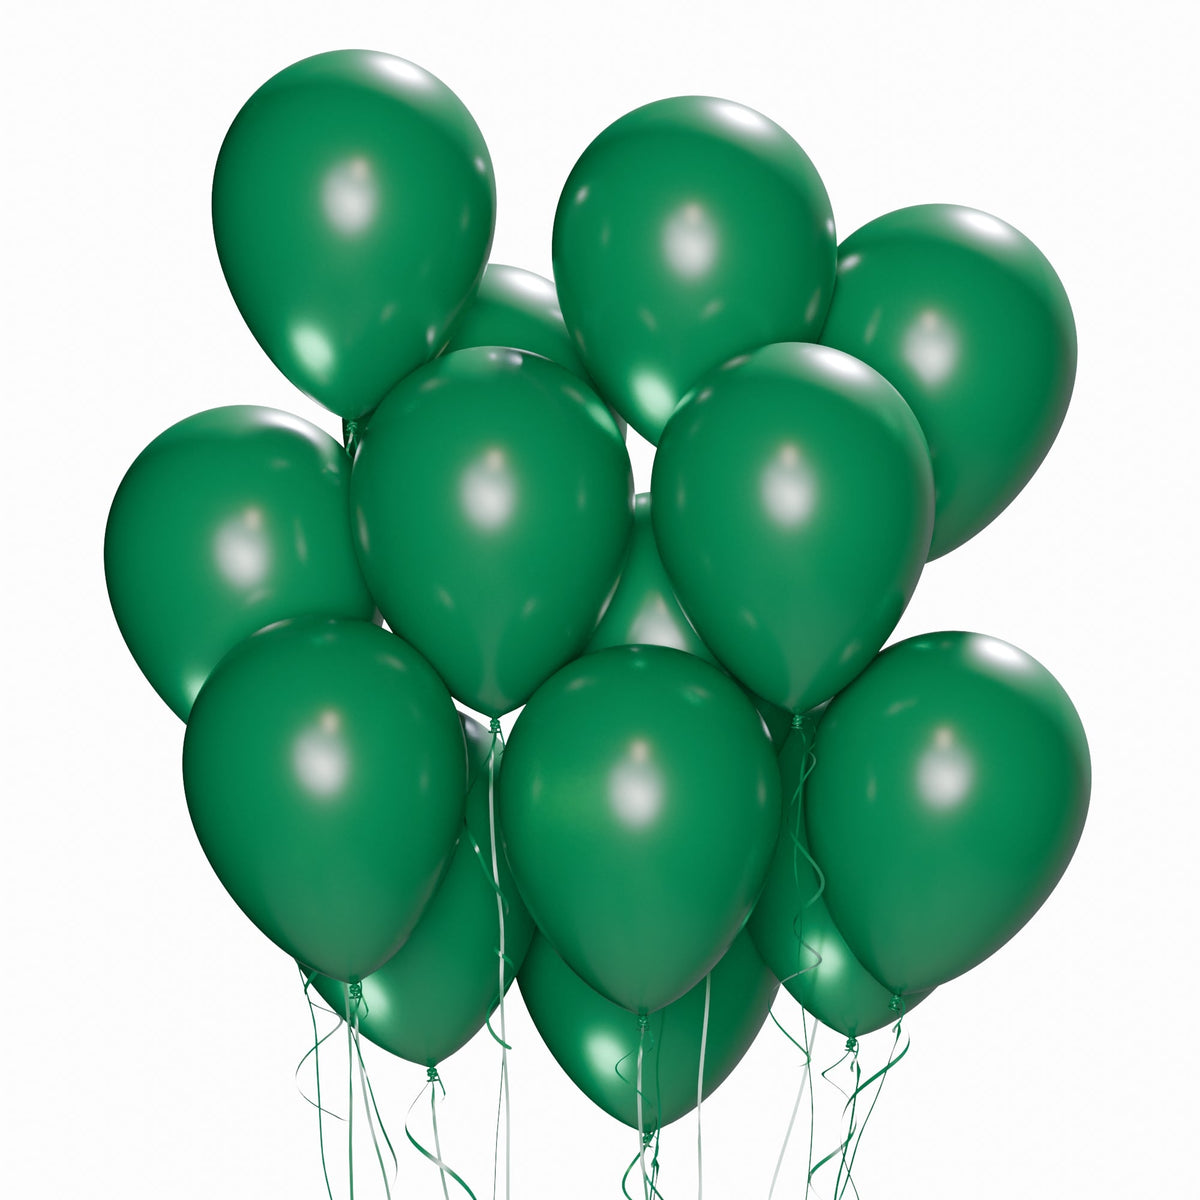 WIDE OCEAN INTERNATIONAL TRADE BEIJING CO., LTD Balloons Festive Green Latex Balloon 12 Inches, 72 Count 810064198069